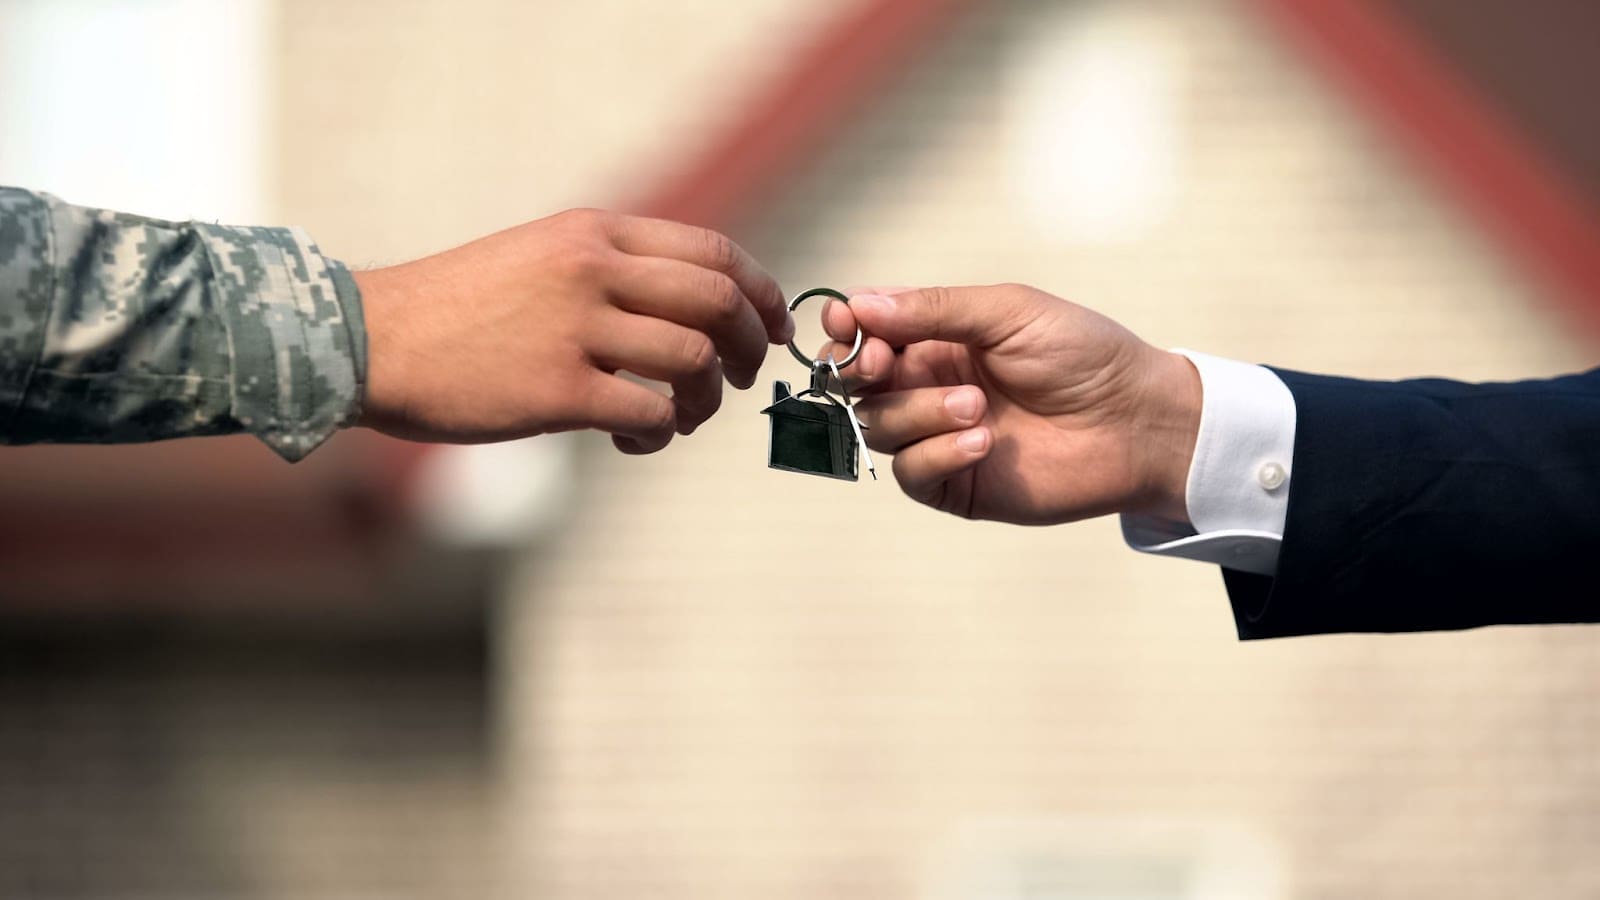 Businessman presents a house key to a military man - representing VA loans